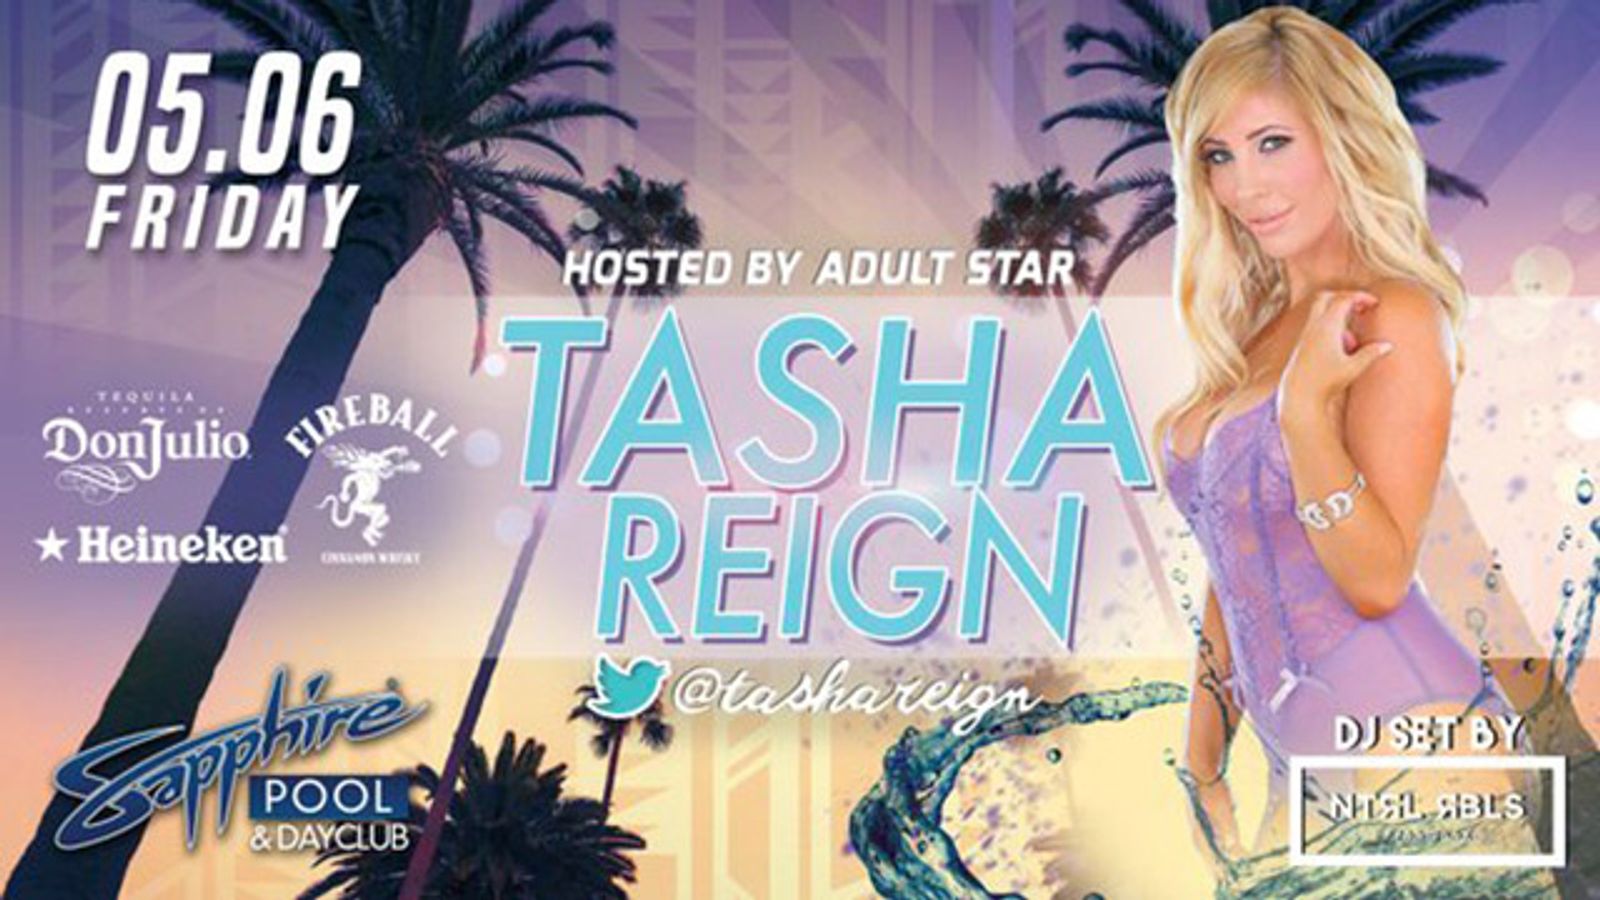 XXX Star Tasha Reign to Appear At The Sapphire Pool Las Vegas on Friday